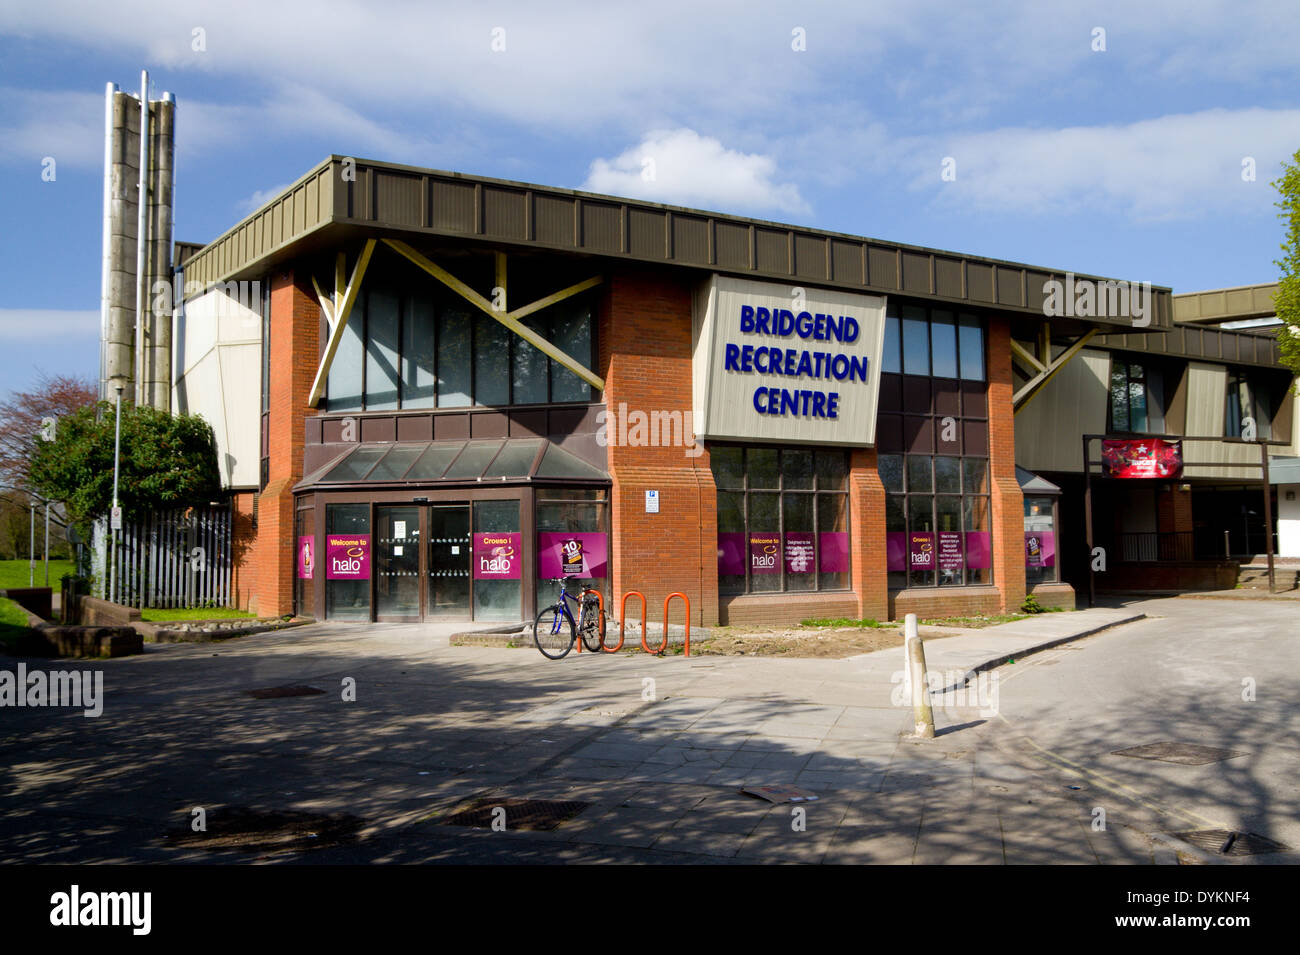 Bridgend Recreation Centre, Bridgend, South Wales, UK. Stock Photo